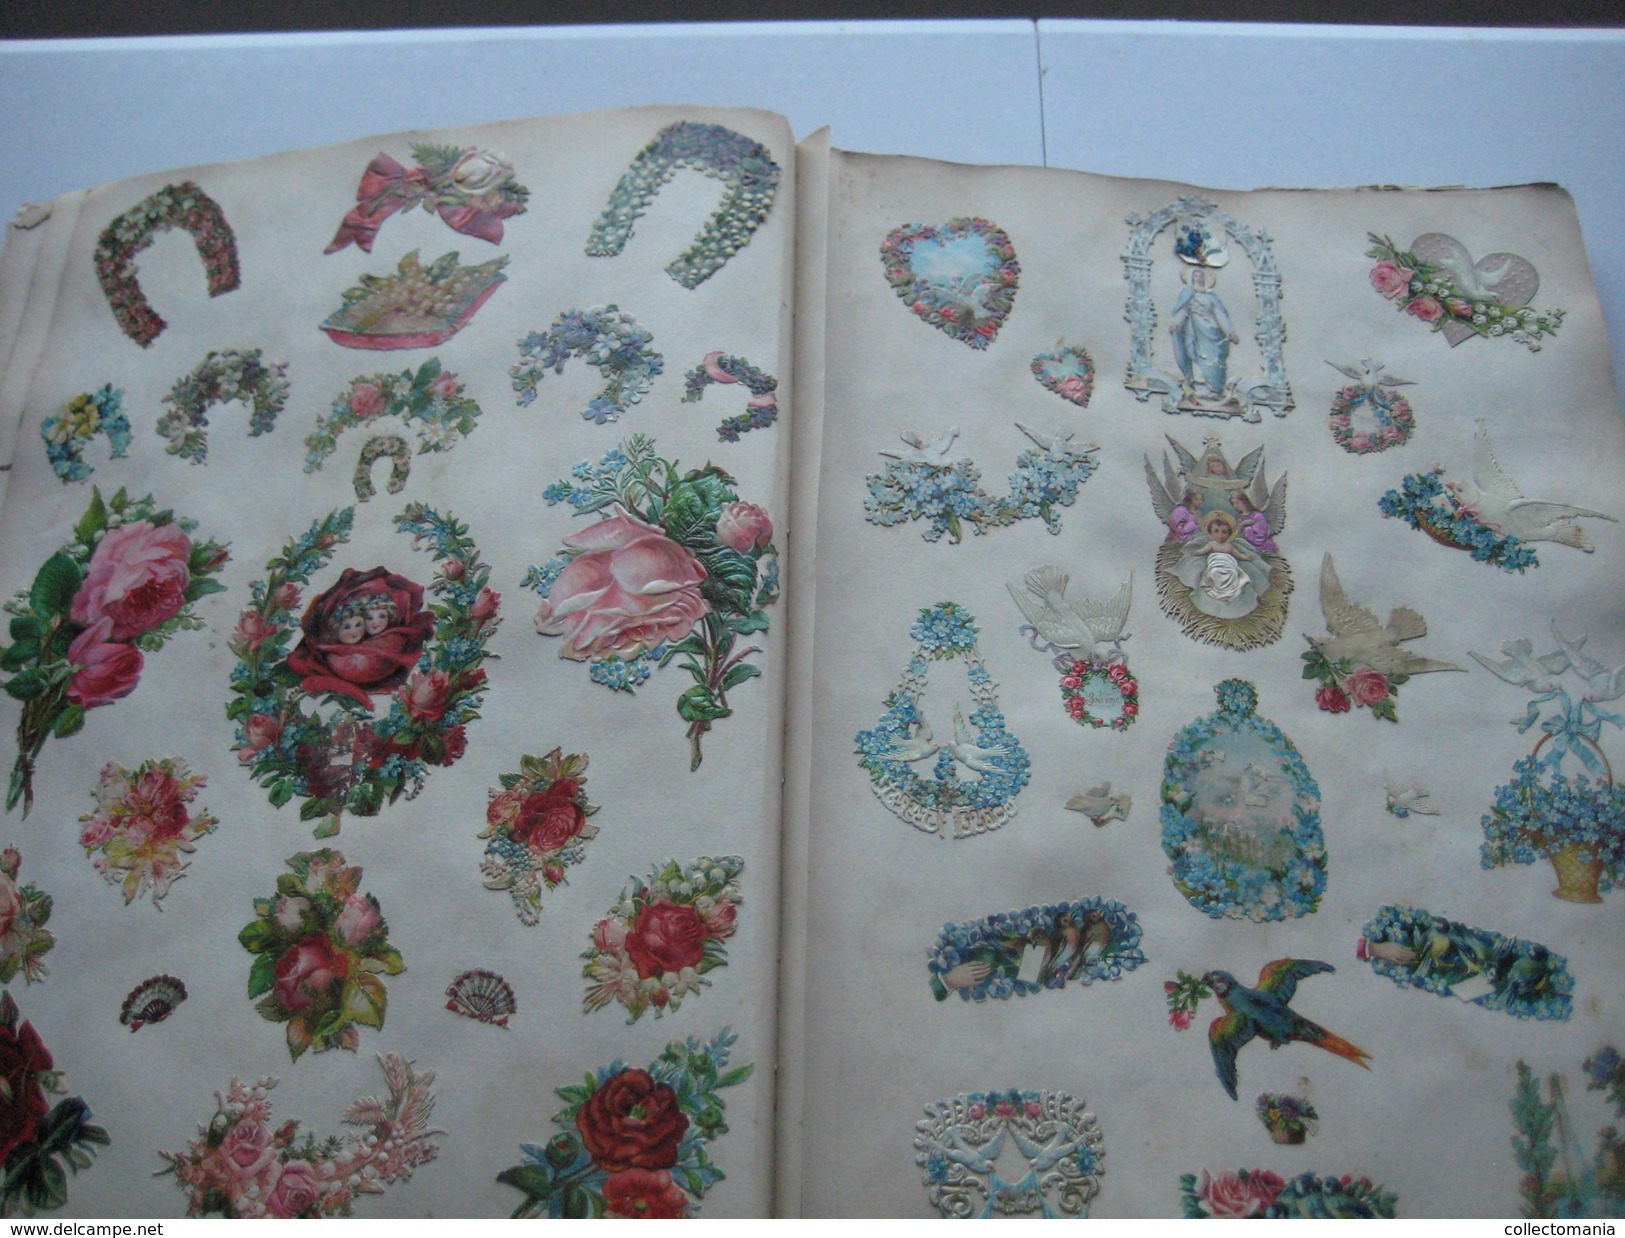 tres ancien epaix (dikke) Album chromos Glanzbilder far before 1900 also advertising cards, expo 1900 & postman SERIE